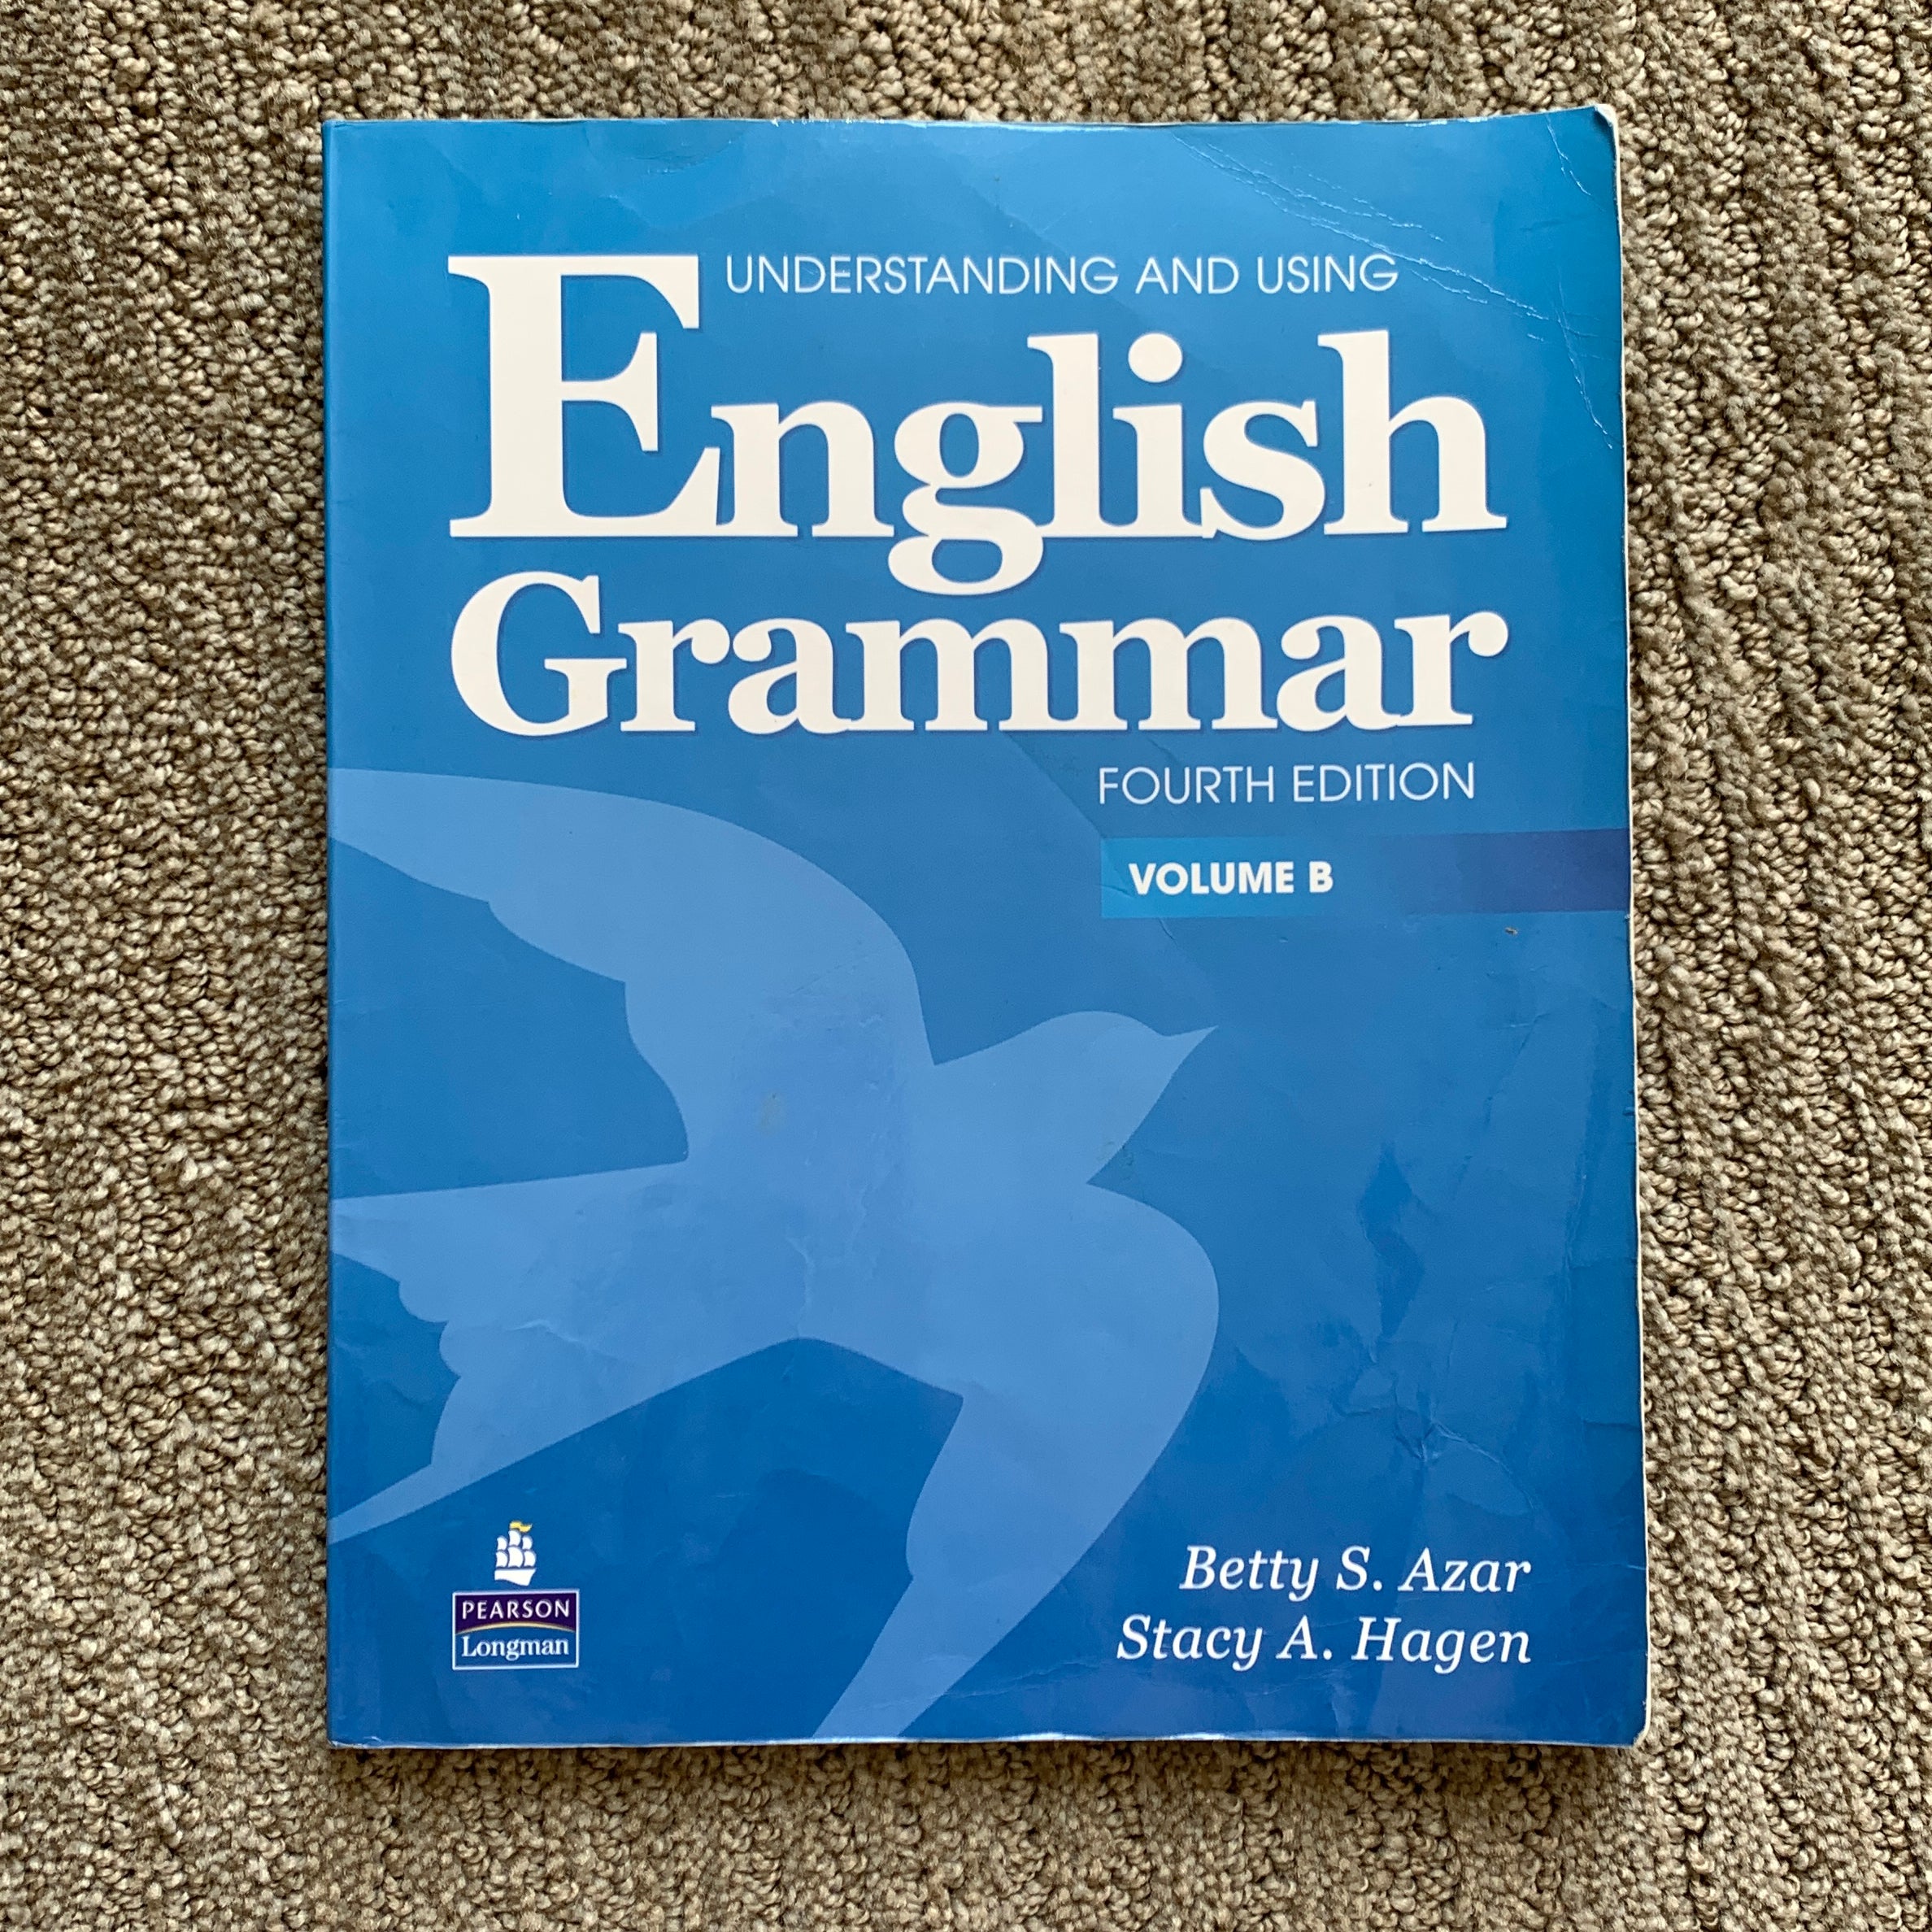 by　Paperback　Using　Understanding　and　Betty　Azar,　English　Pangobooks　Grammar　Schrampfer